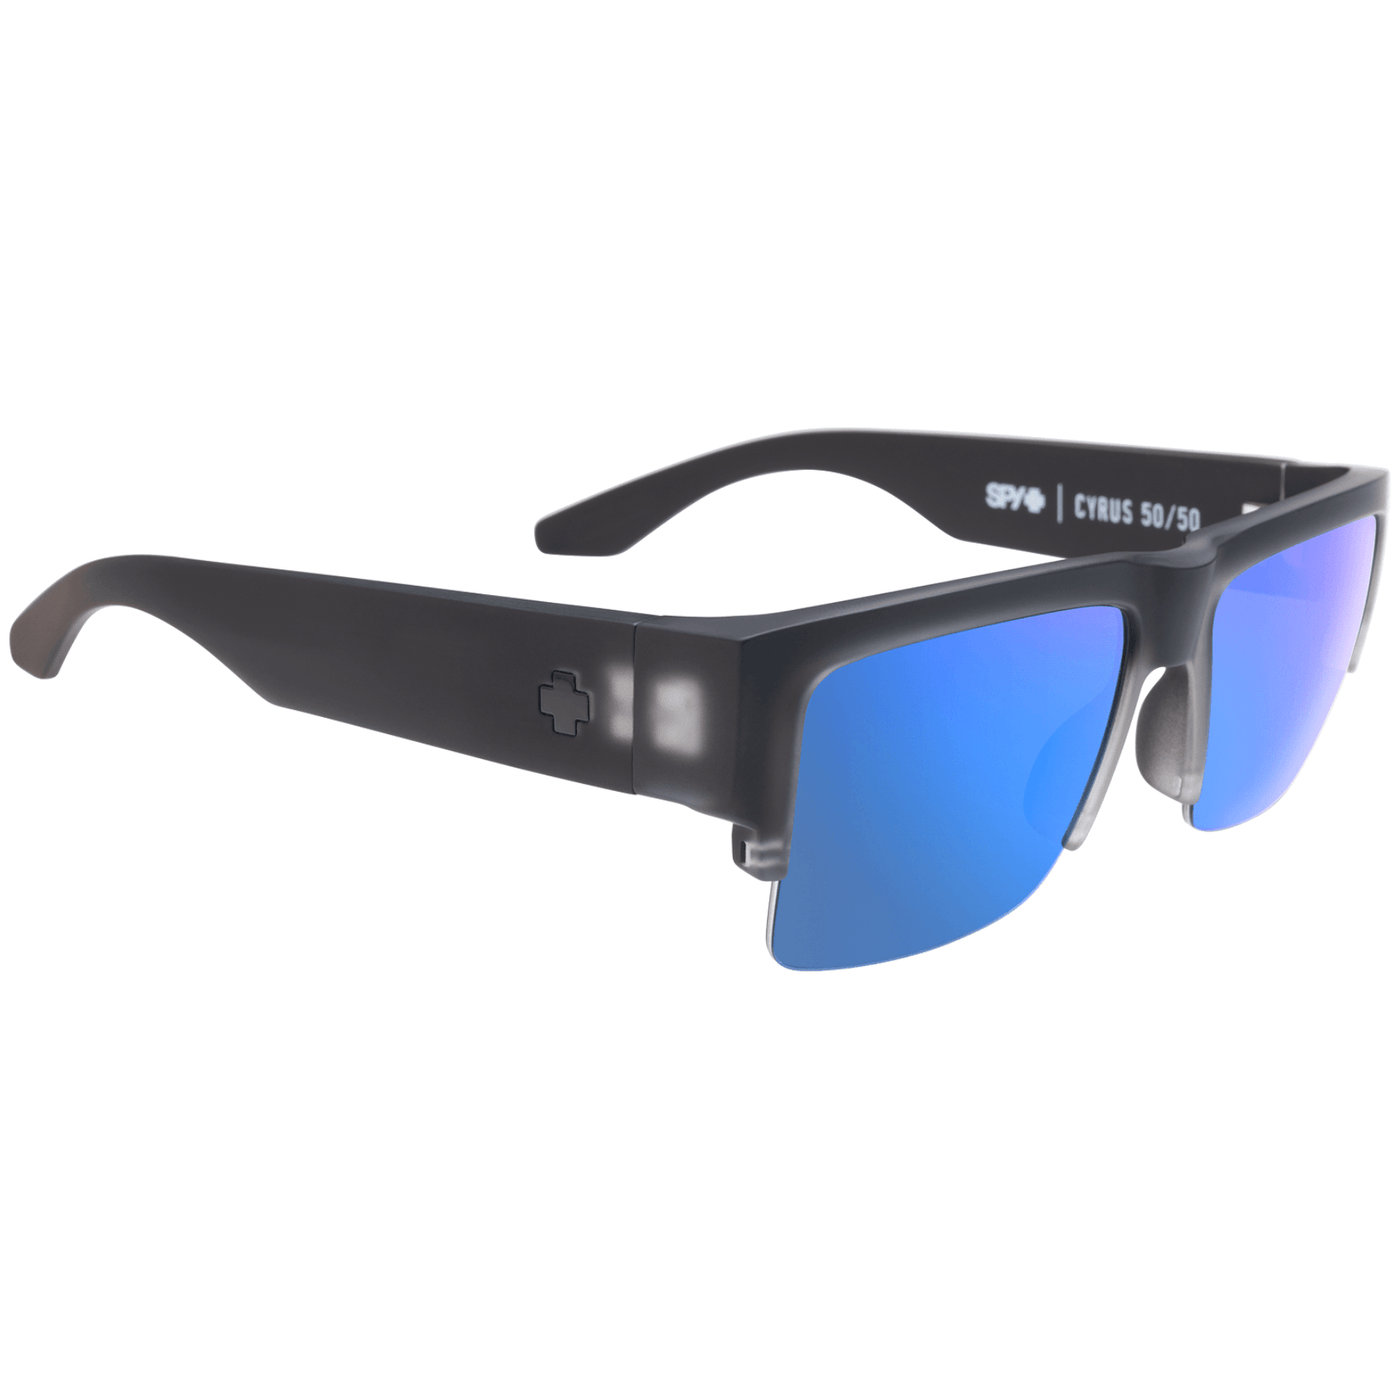 SPY cyrus 5050 sunglasses - blue